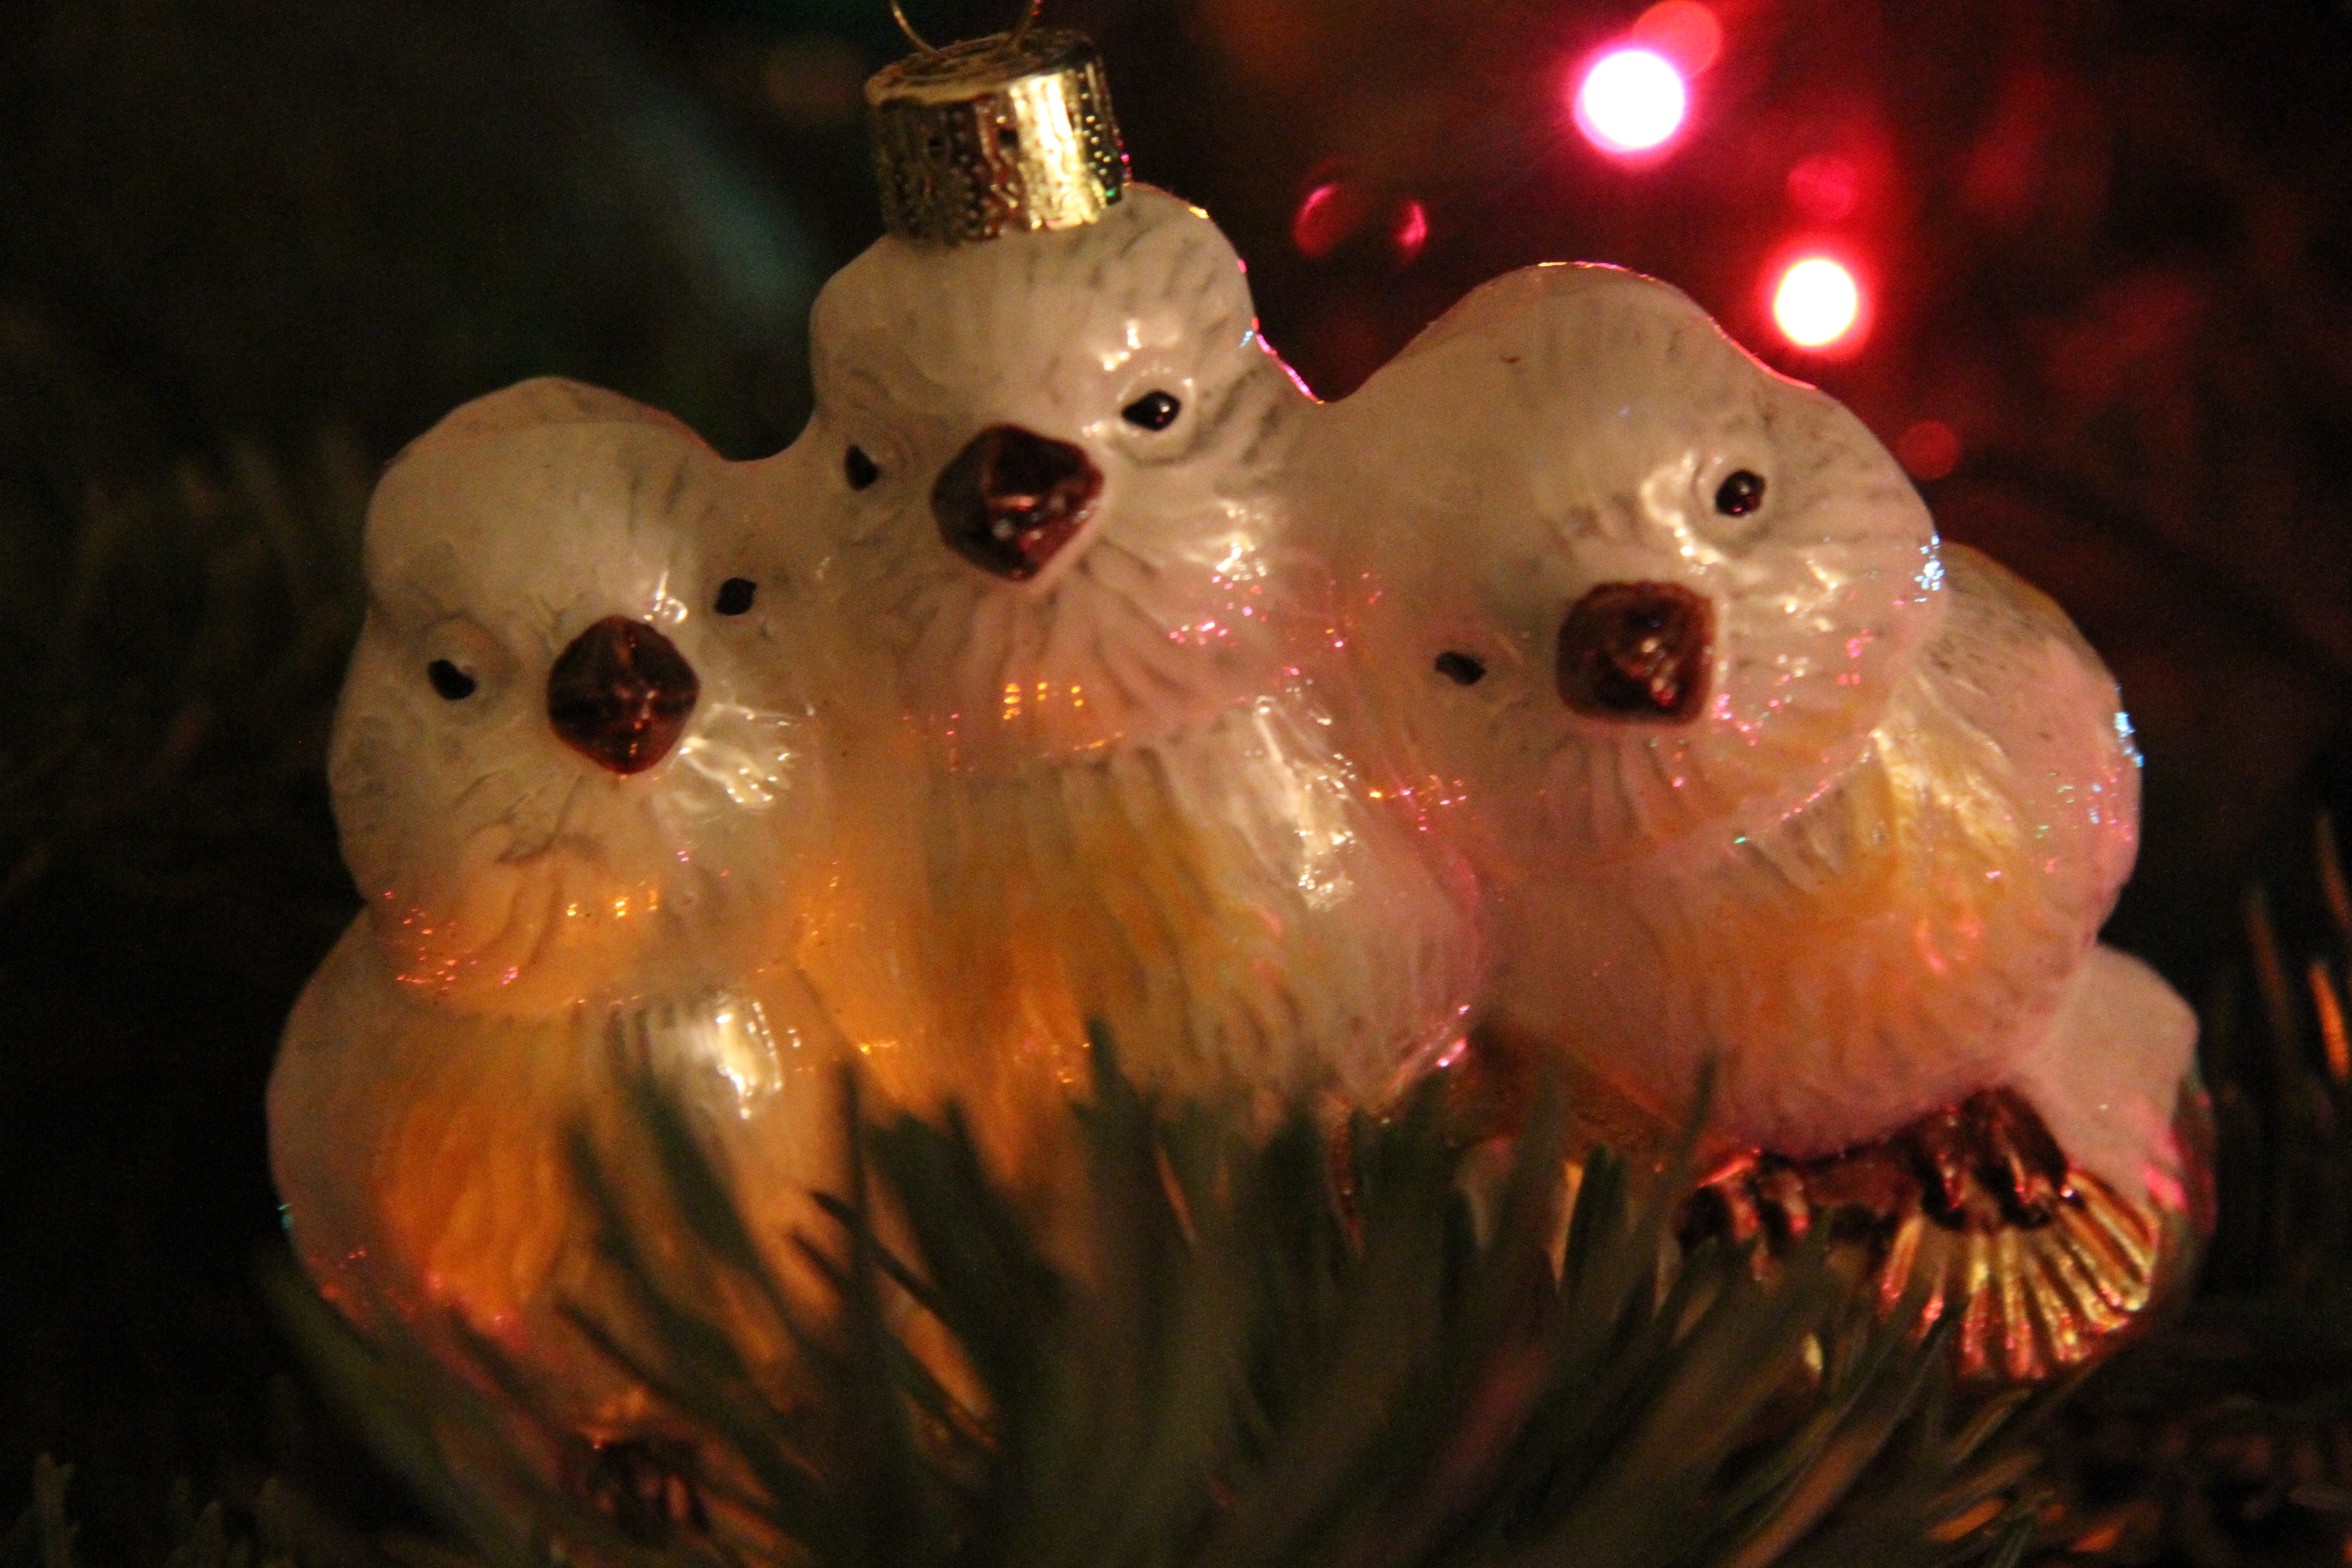 Bird ornaments on a Christmas tree